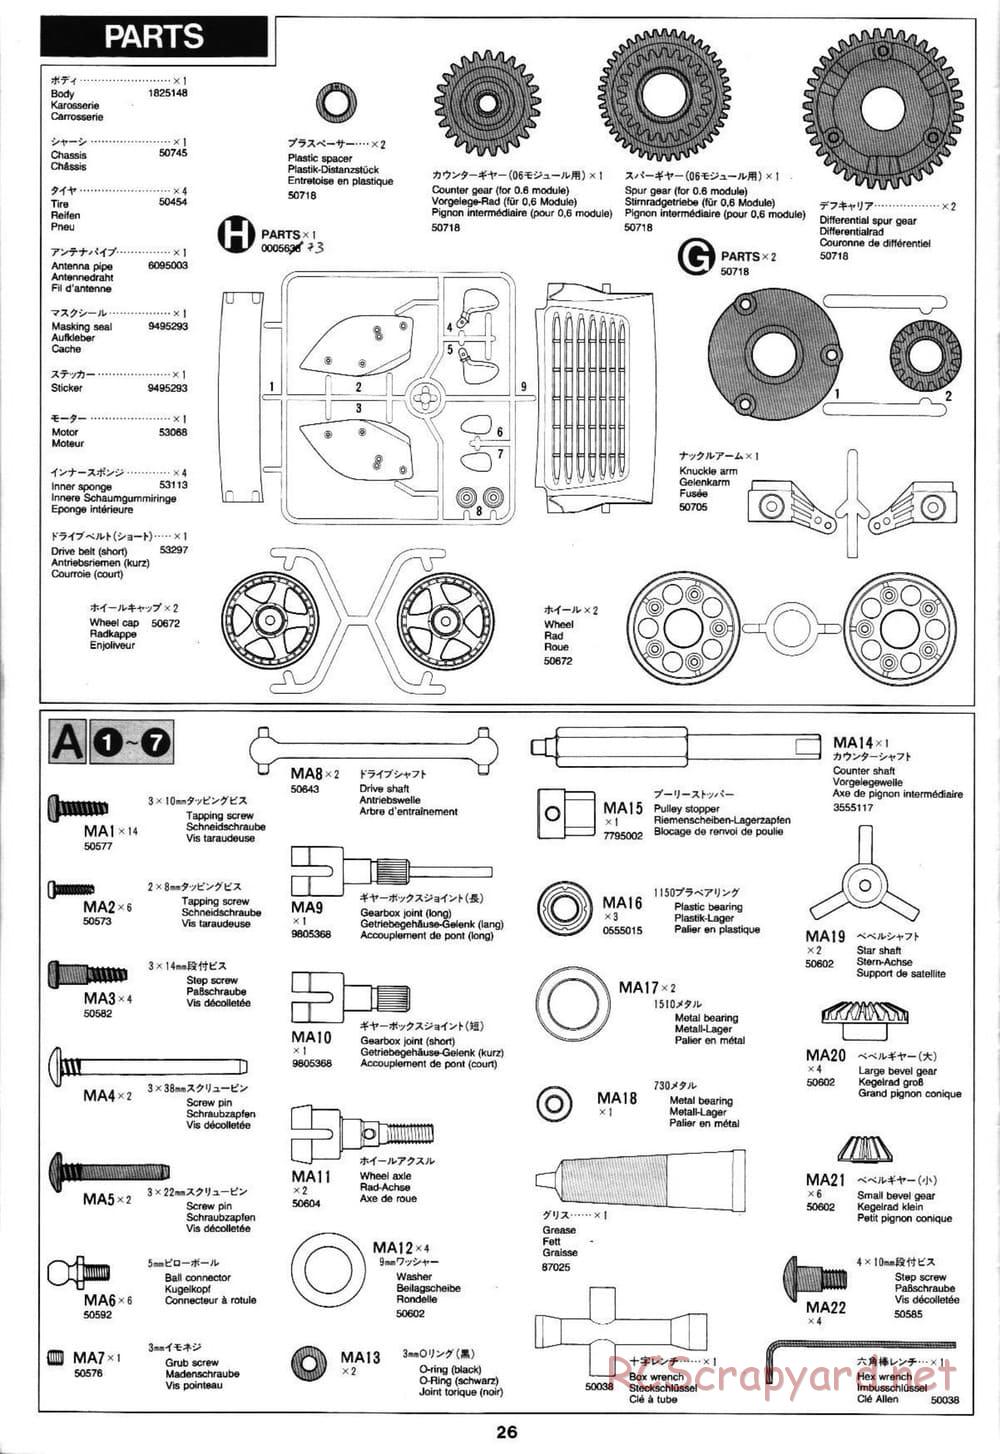 Tamiya - PIAA Porsche 911 - TA-03RS Chassis - Manual - Page 26